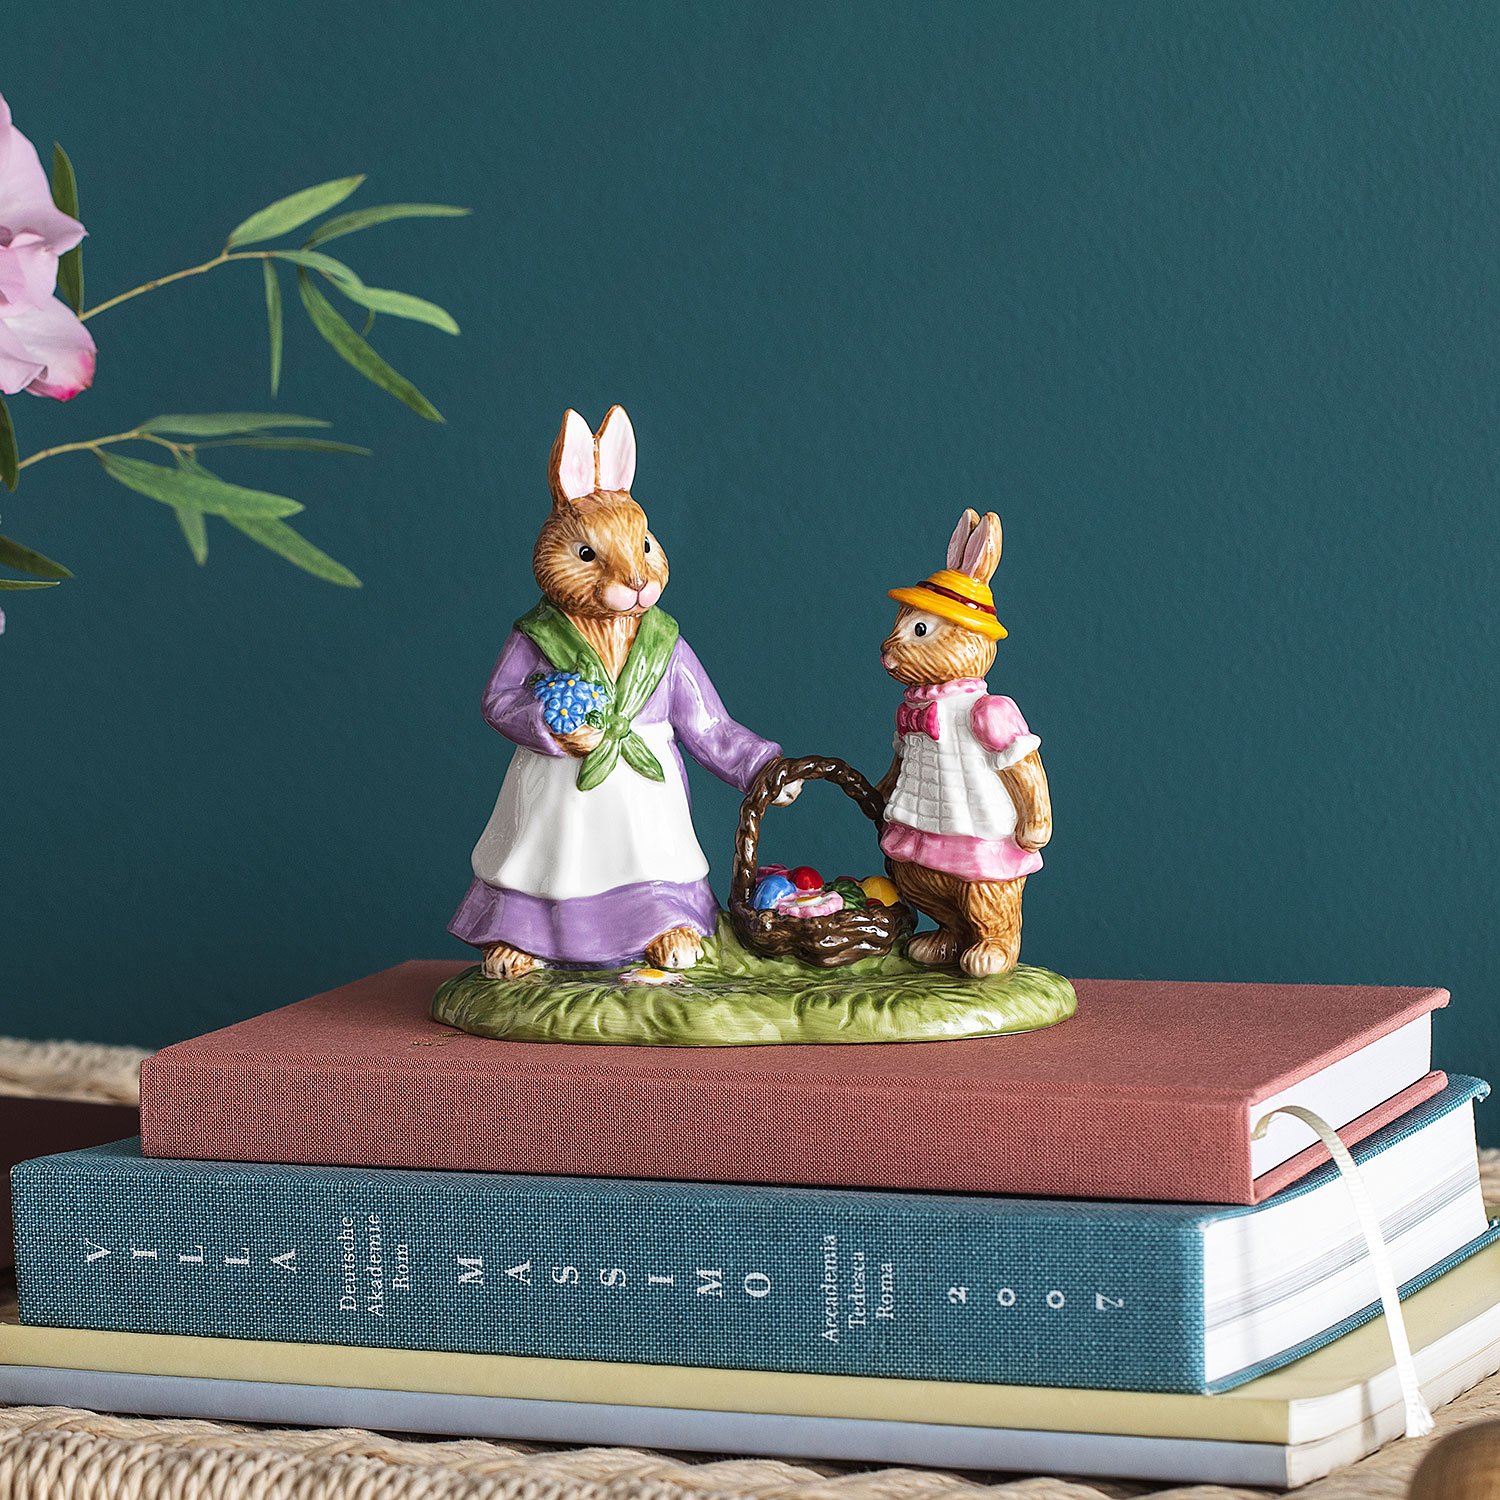 Декоративная фигурка "Цветочная поляна" 8.4см, Bunny Tales
https://spb.v-b.ru
г.Санкт-Петербург
eshop@v-b.spb.ru
+7(812)3801977